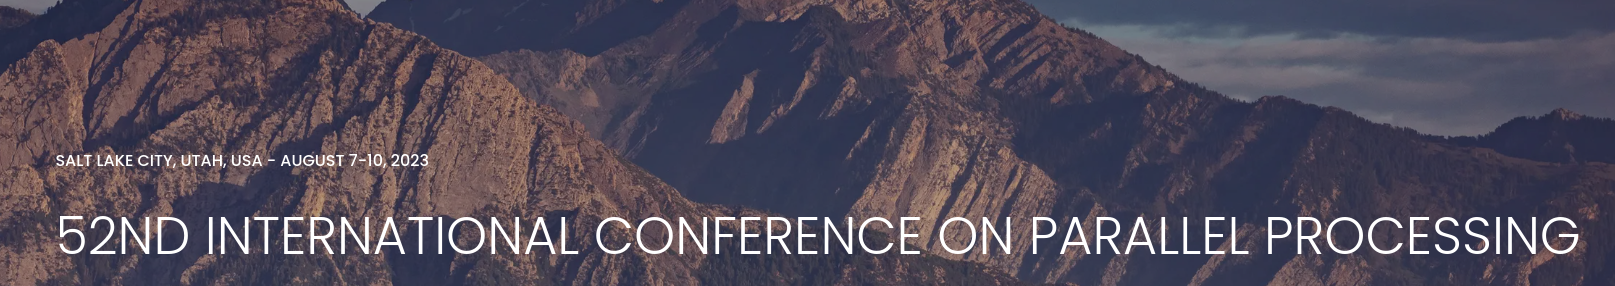 events-conferences